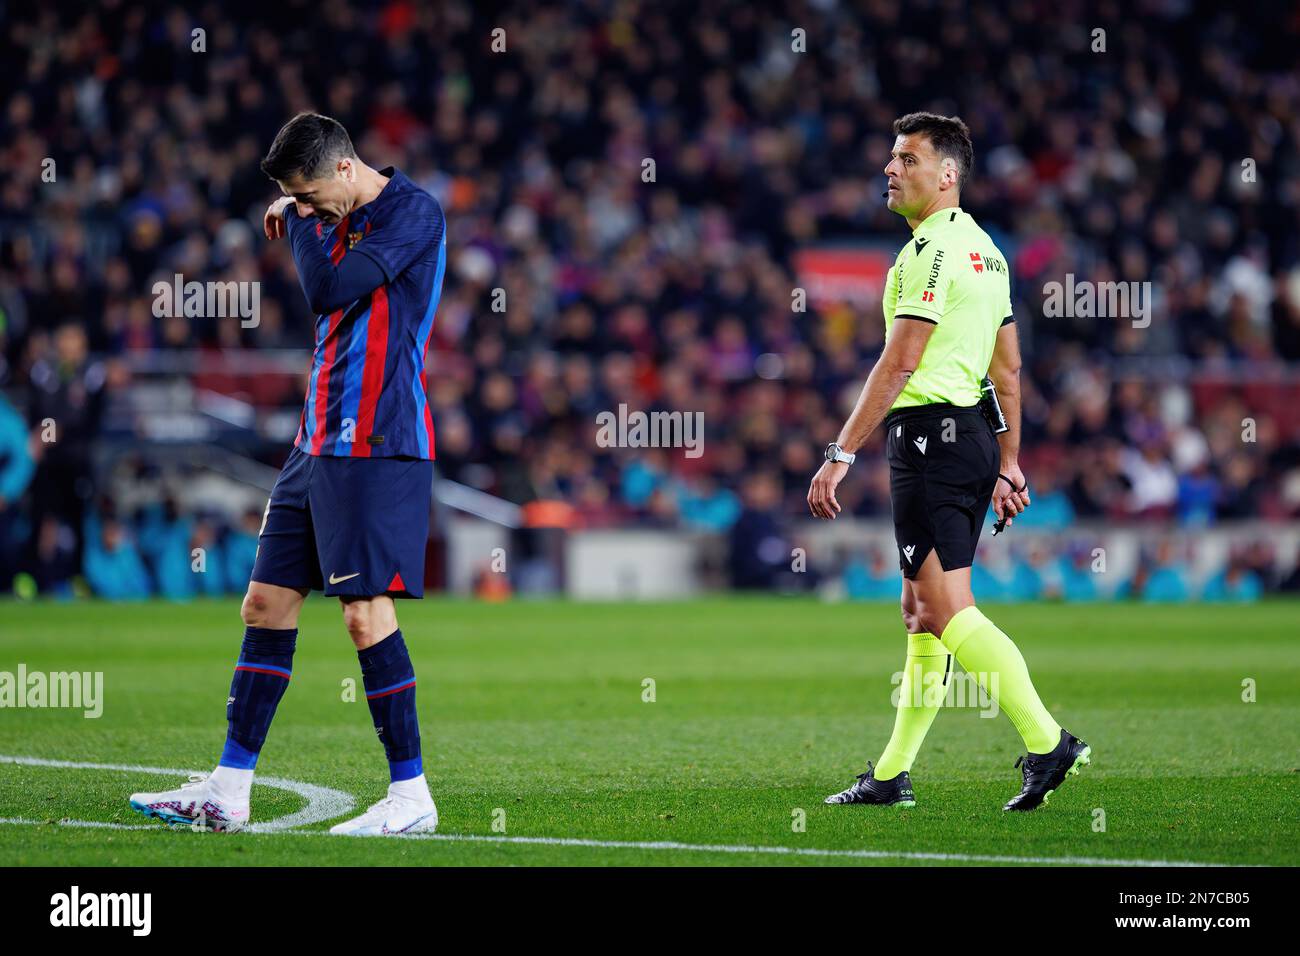 BARCELONA - JAN 25: Gil Manzano (R) and Lewandowski (L) argue during the Copa del Rey match between FC Barcelona and Real Sociedad at the Spotify Camp Stock Photo